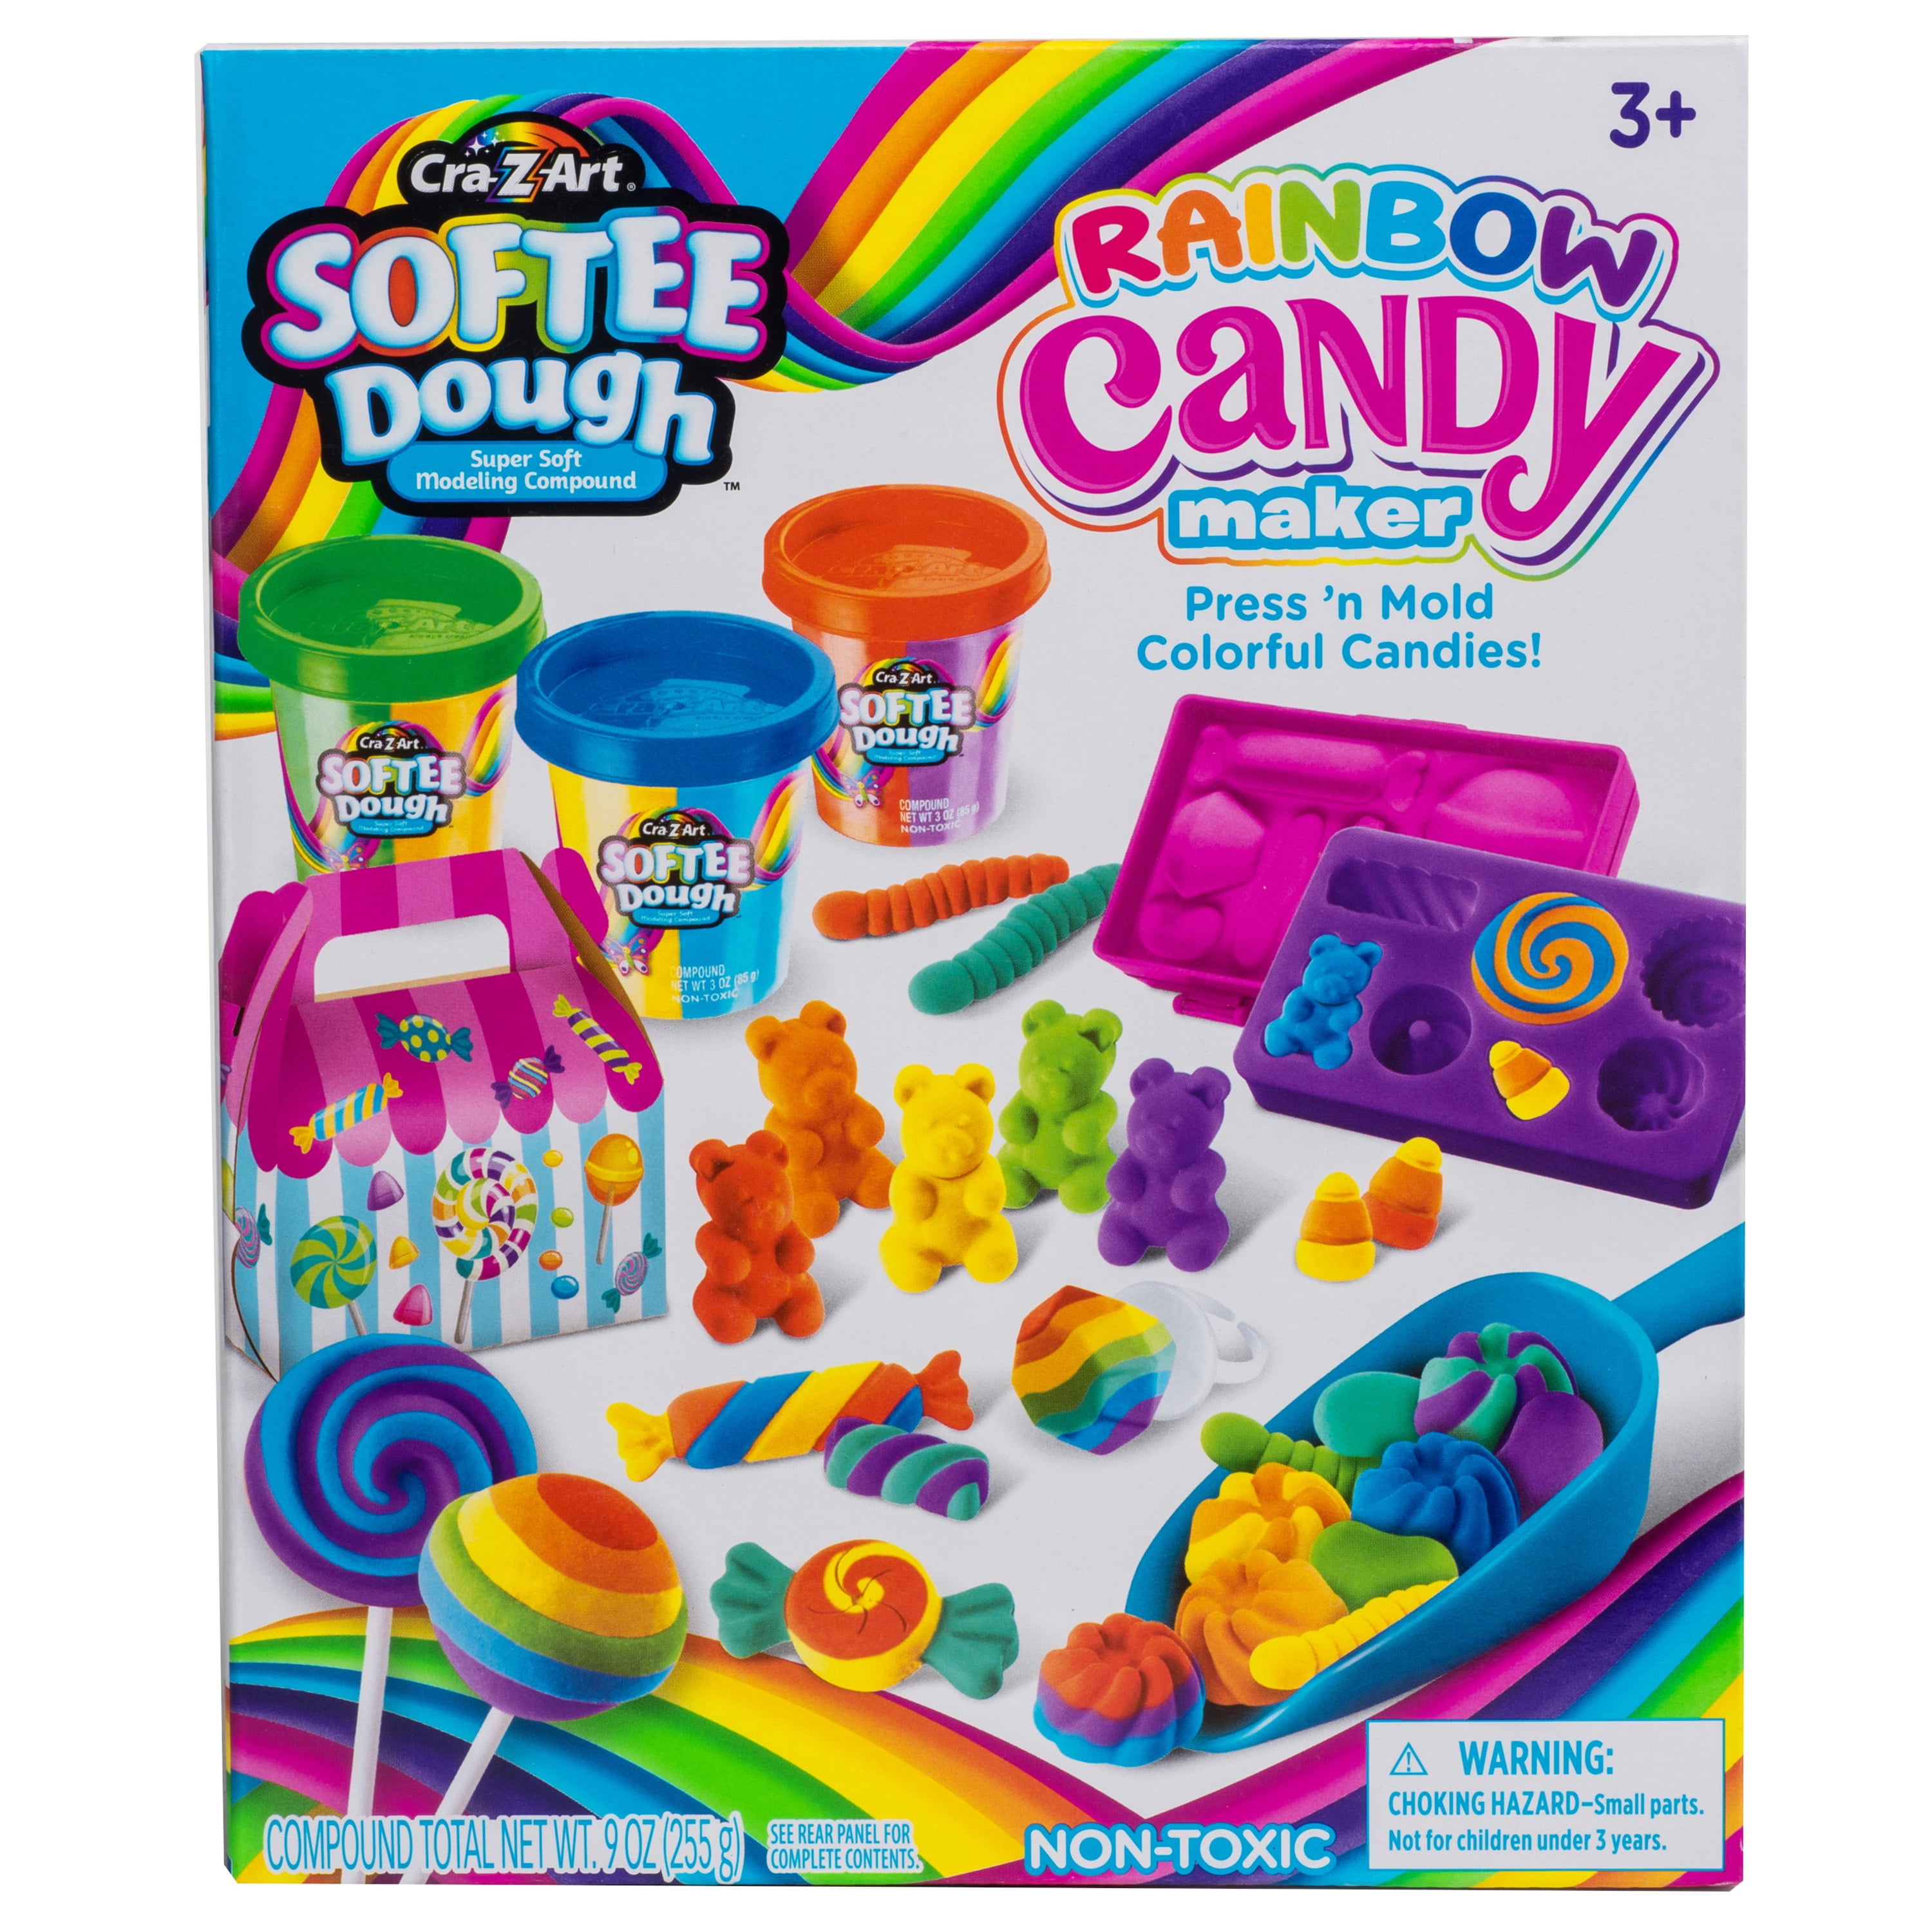 Cra-Z-Art Softee Dough Multicolor Rainbow Candy Maker Dough Set